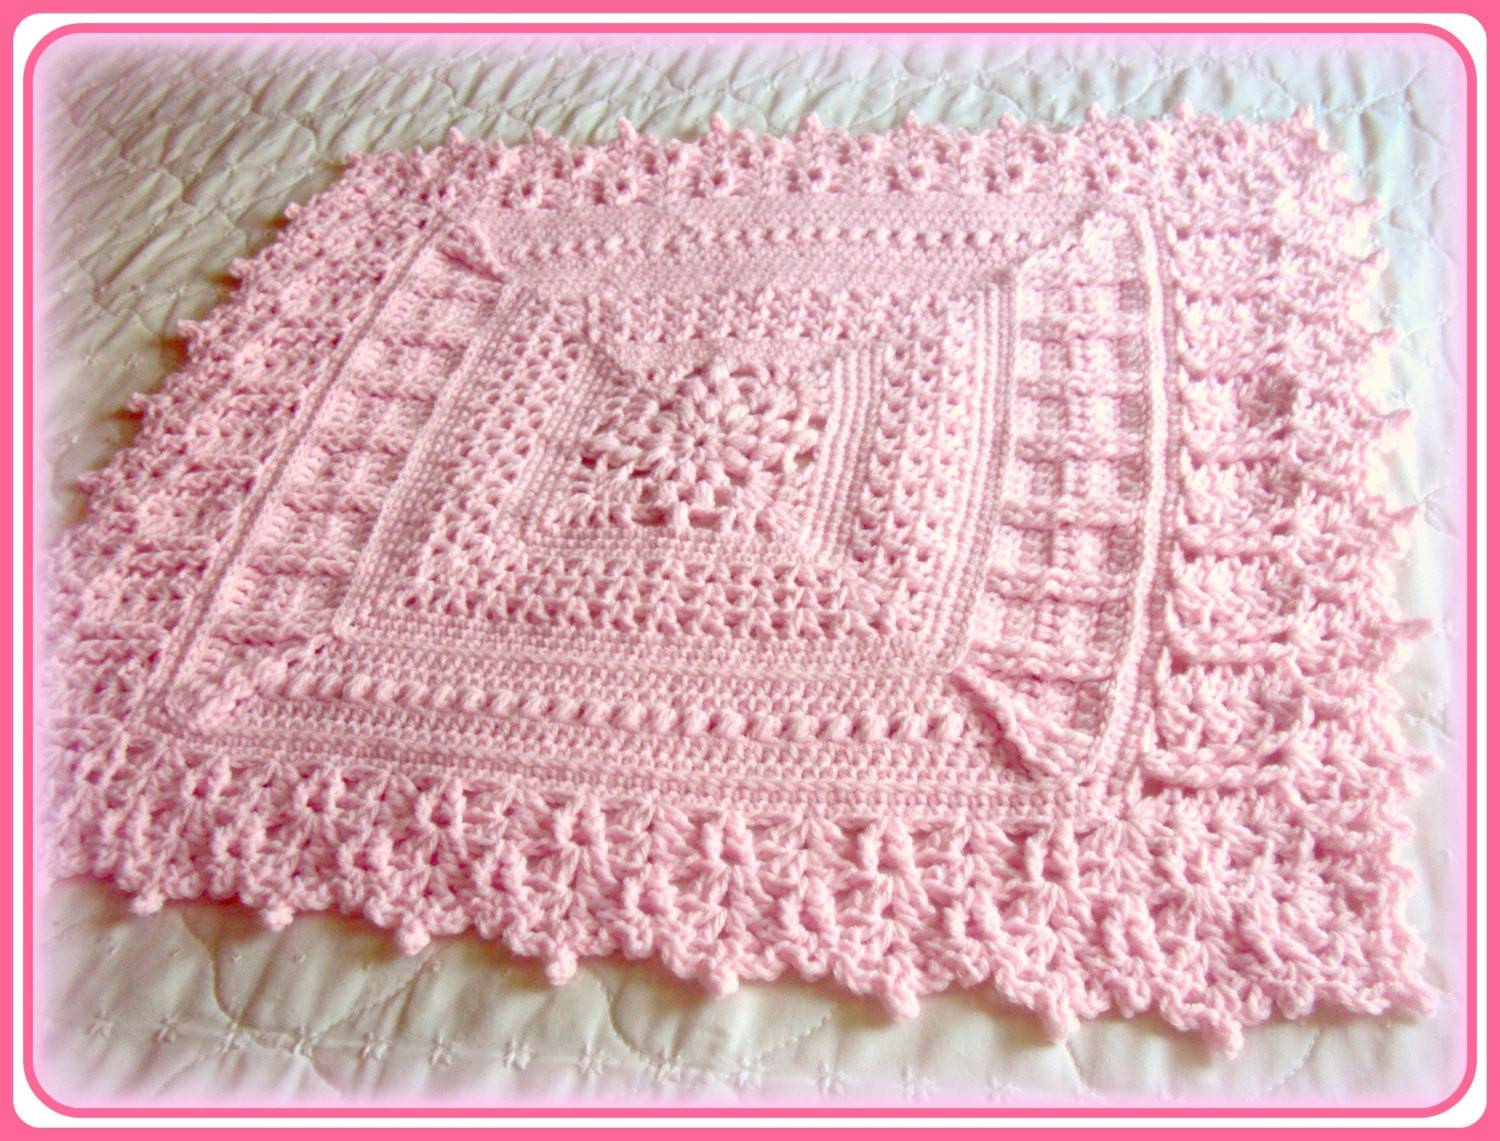 Crochet Baby Shawls Free Patterns Ba Blankets Patterns Free Crochet Blanket For Beginners And Knit